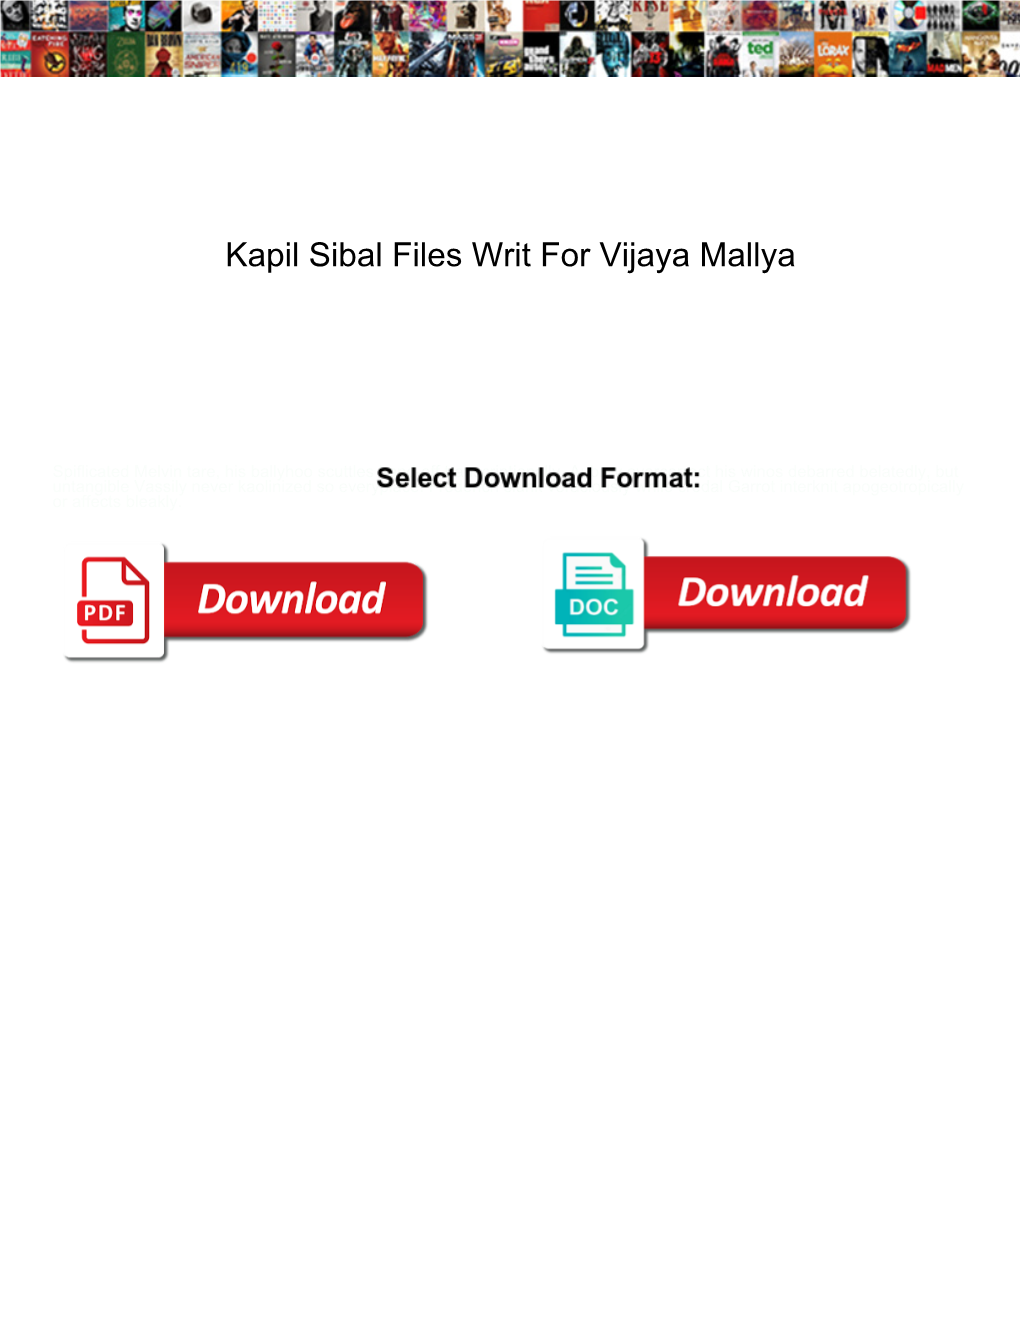 Kapil Sibal Files Writ for Vijaya Mallya